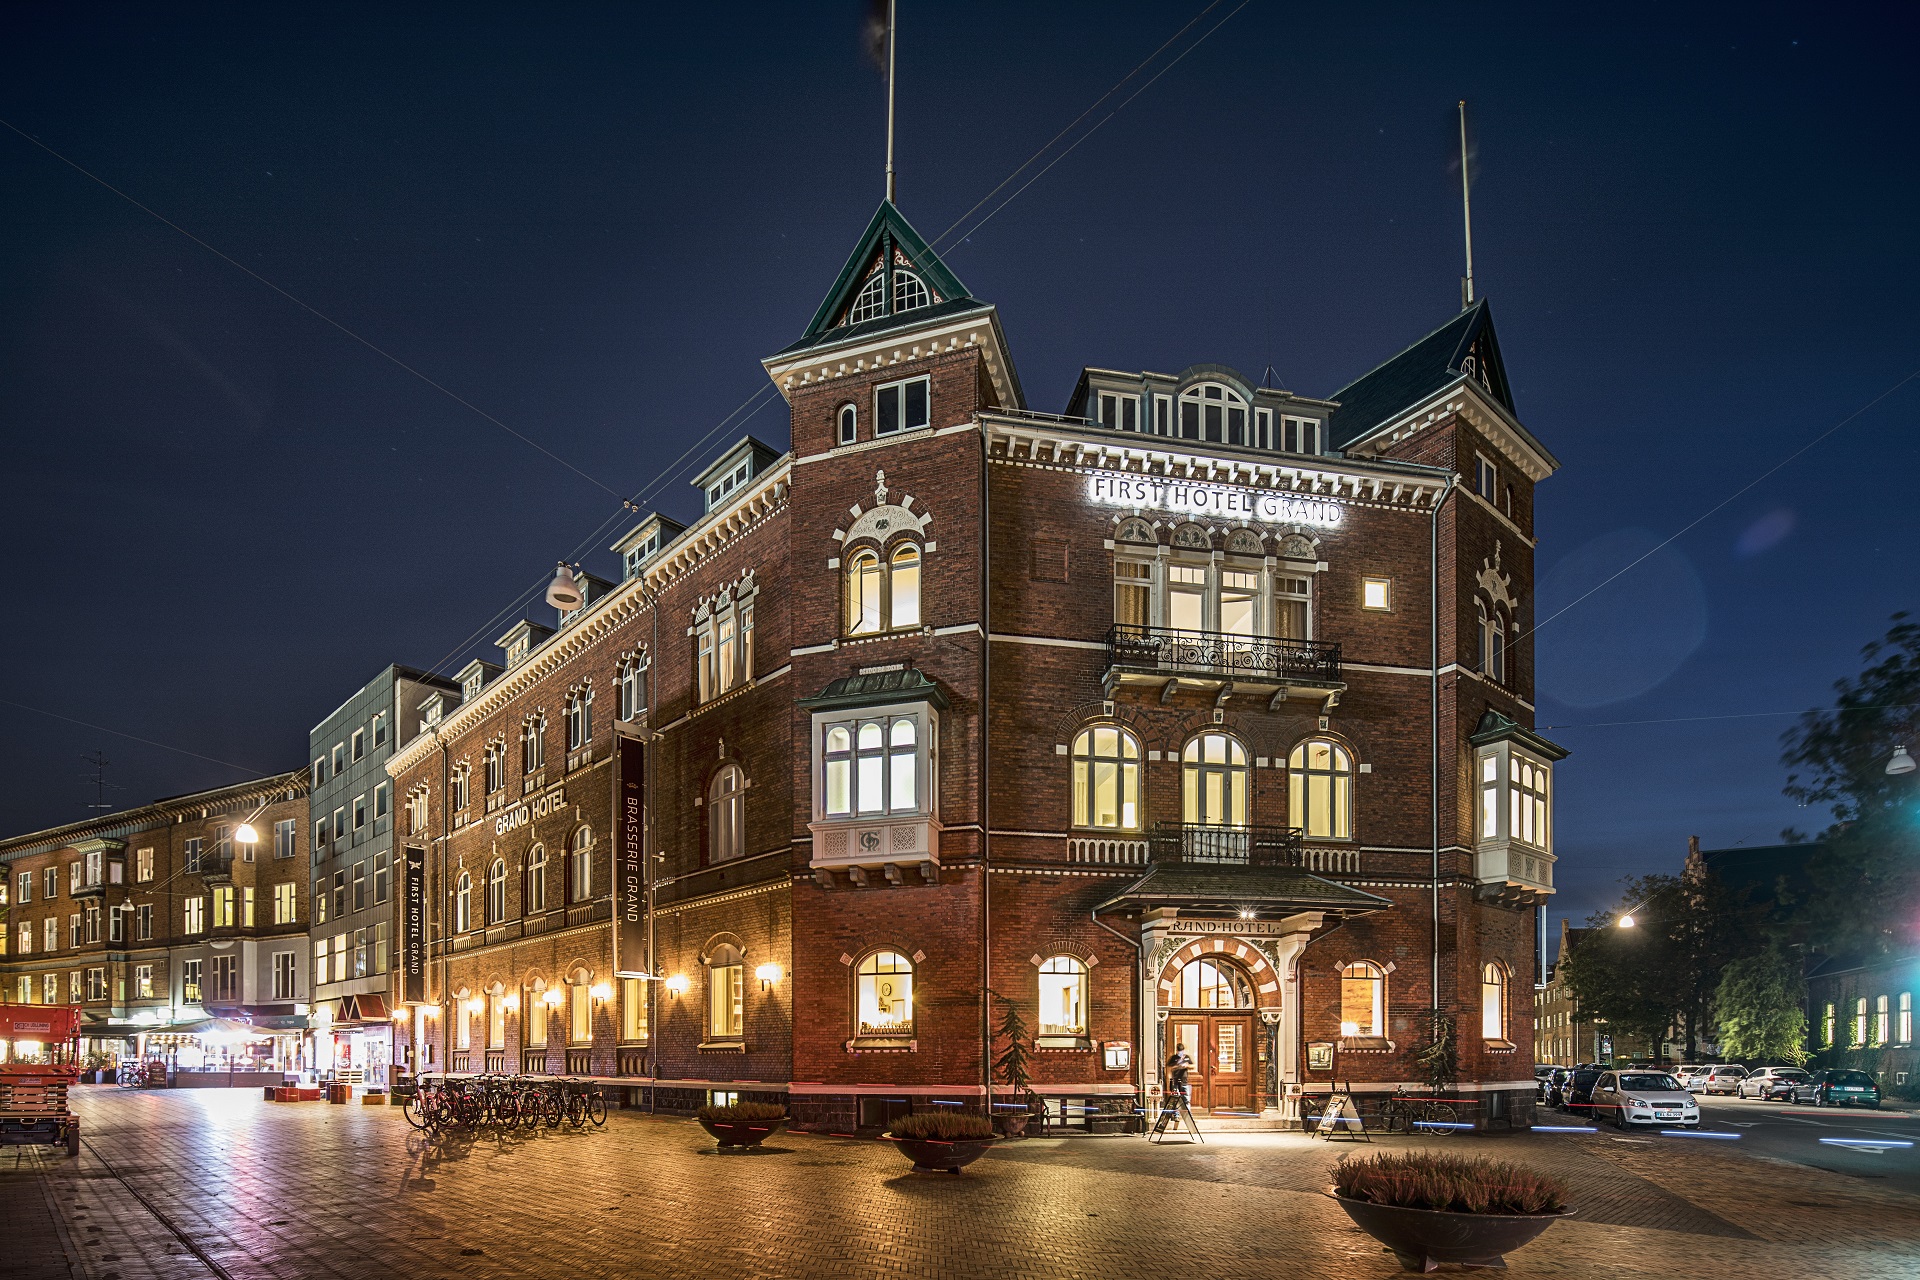 First Hotel Grand | Golf i Odense